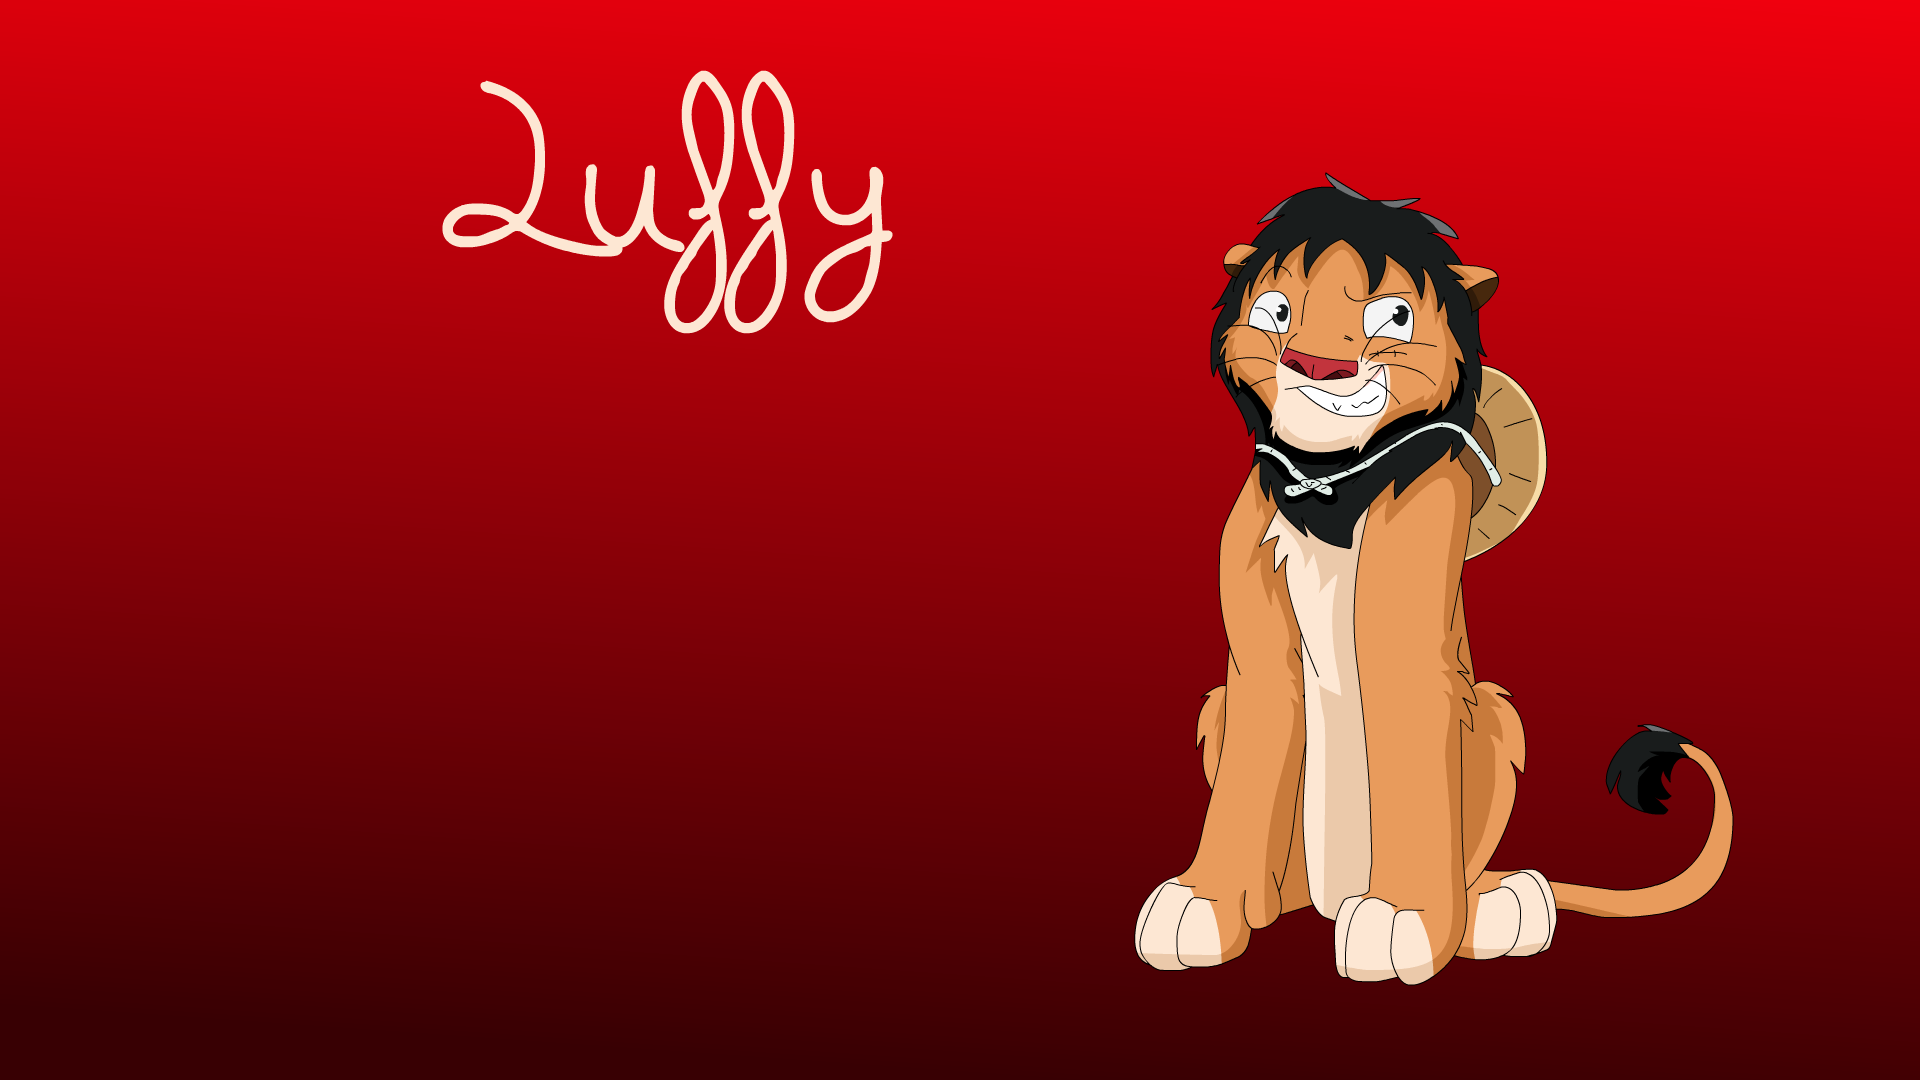 Luffy 2 by alexiscabo1.deviantart.com on @DeviantArt